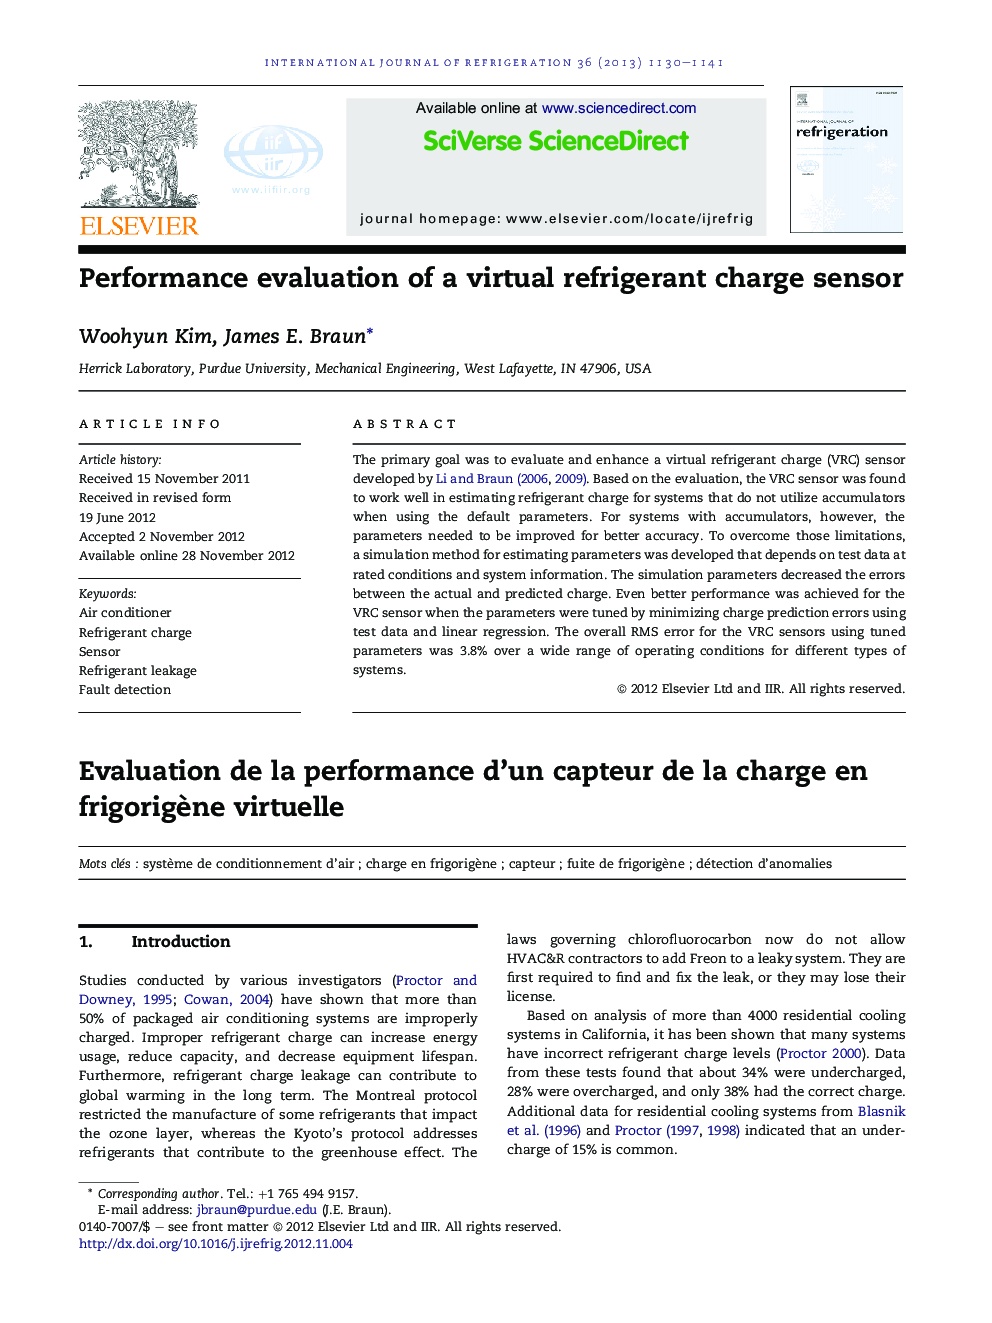 Performance evaluation of a virtual refrigerant charge sensor